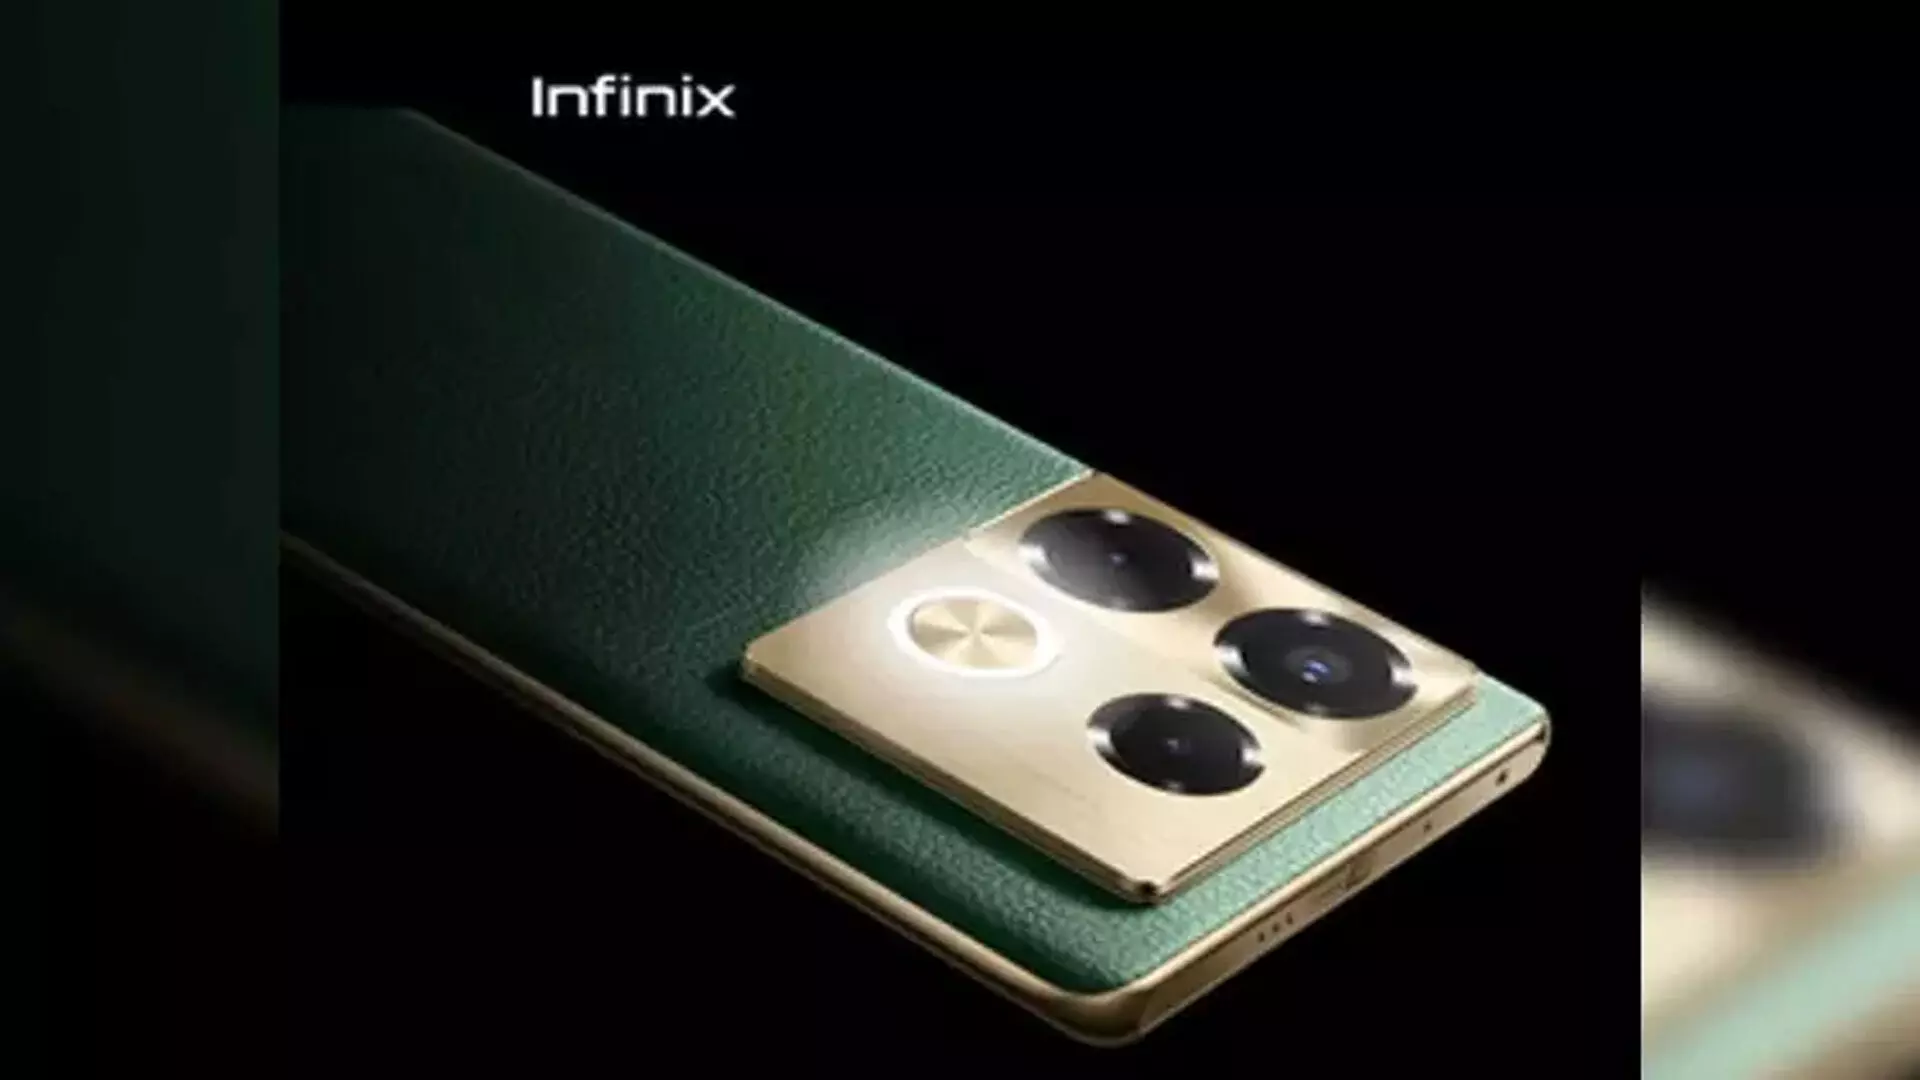 Infinix ने वायरलेस मैग्नेटिक चार्जिंग सॉल्यूशन के साथ नई स्मार्टफोन श्रृंखला लॉन्च की